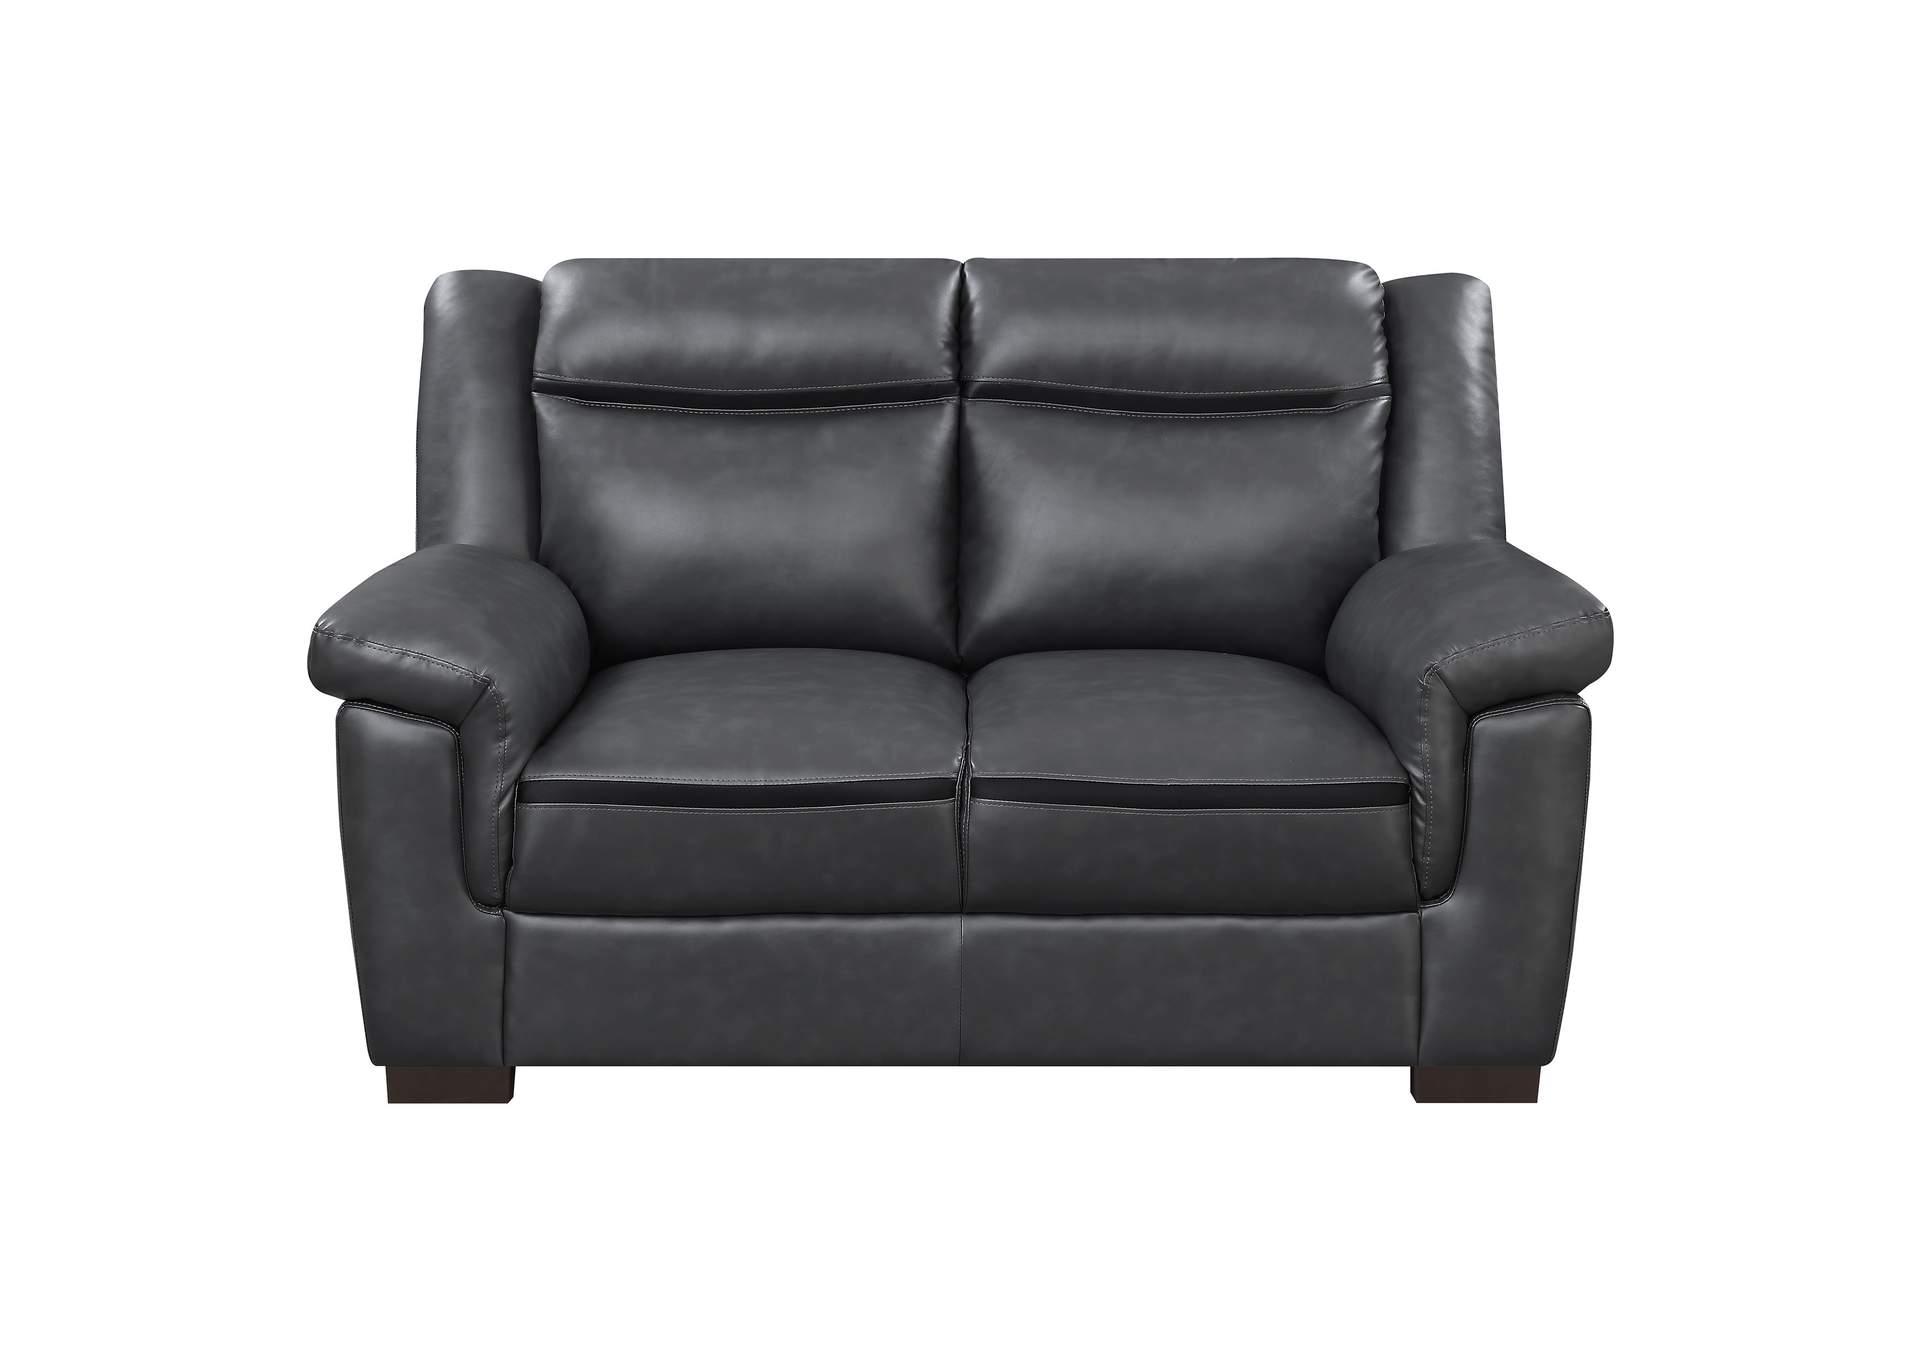 Arabella Pillow Top Upholstered Loveseat Grey,Coaster Furniture